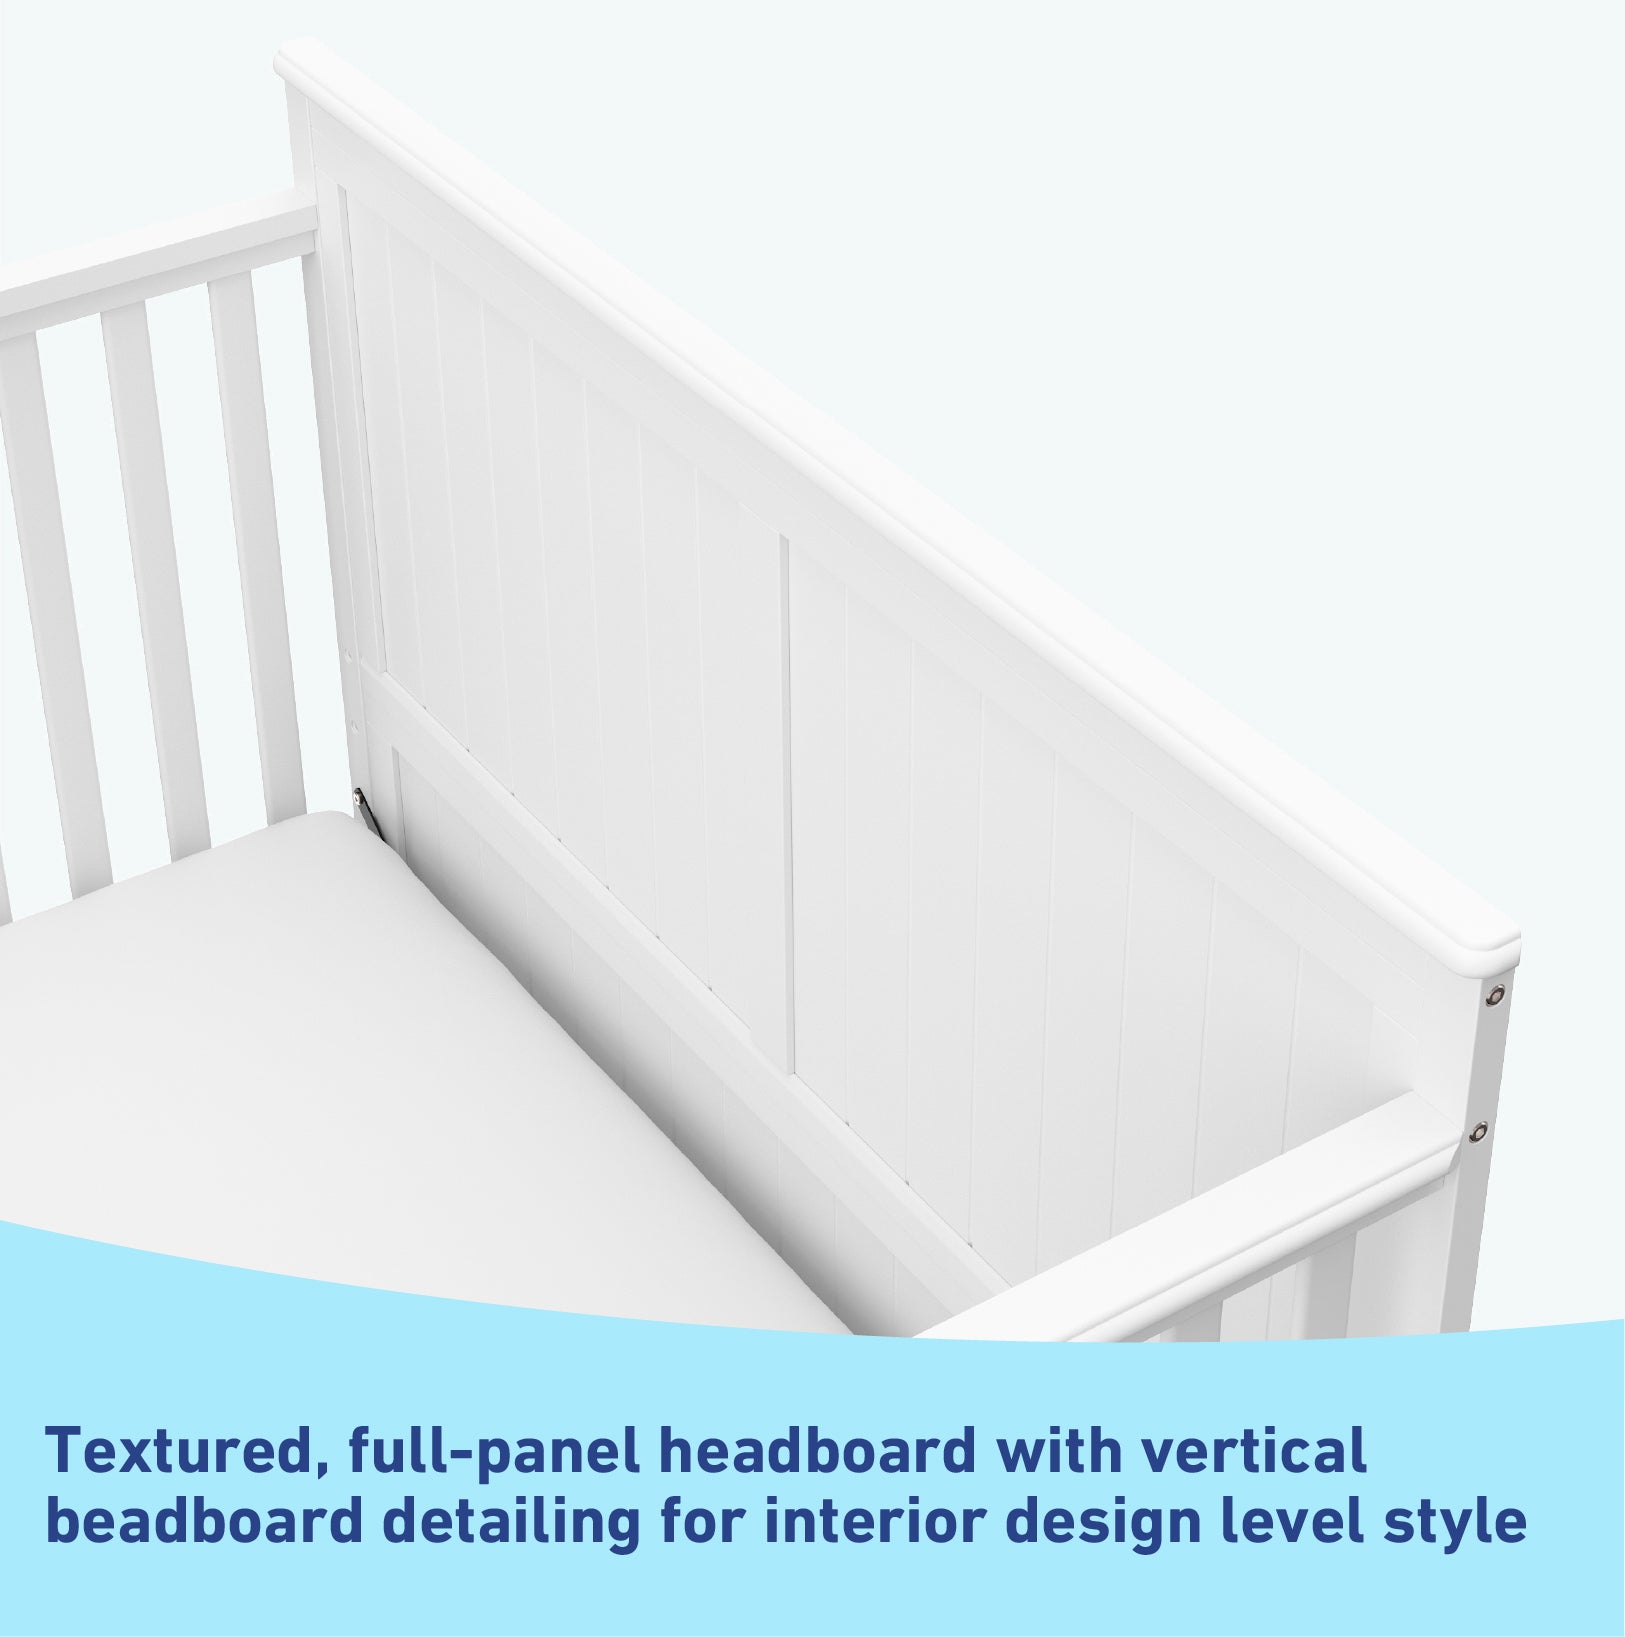 graphic of white crib's headboard